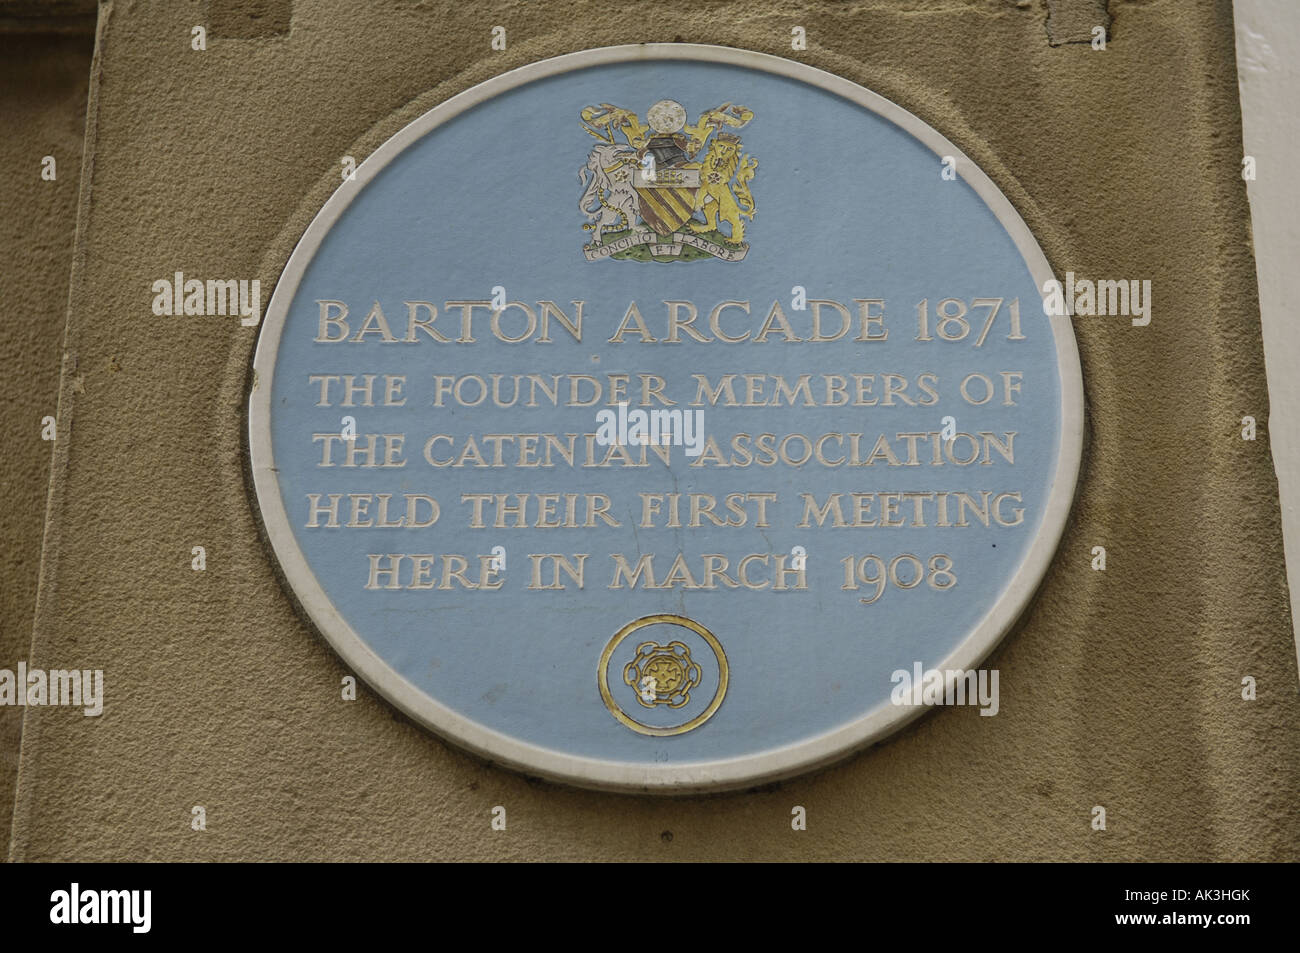 catenian association blue heritage history plaque manchester barton arcade Stock Photo